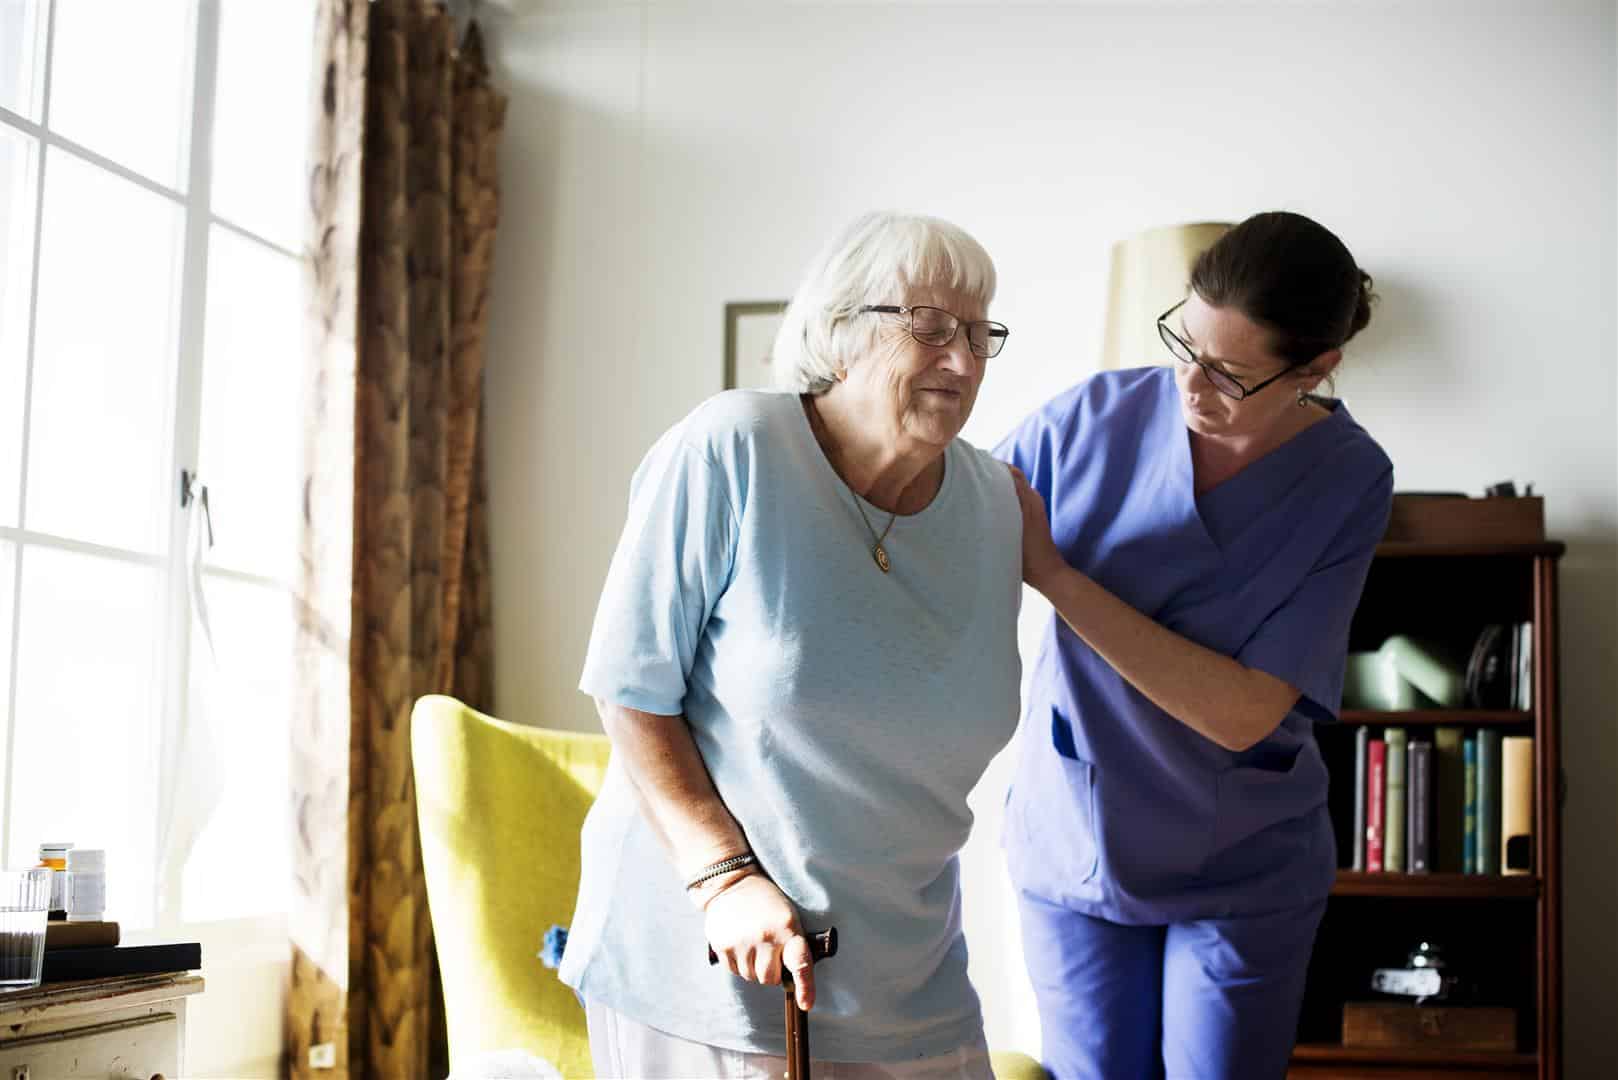 Nurse helping elderly woman